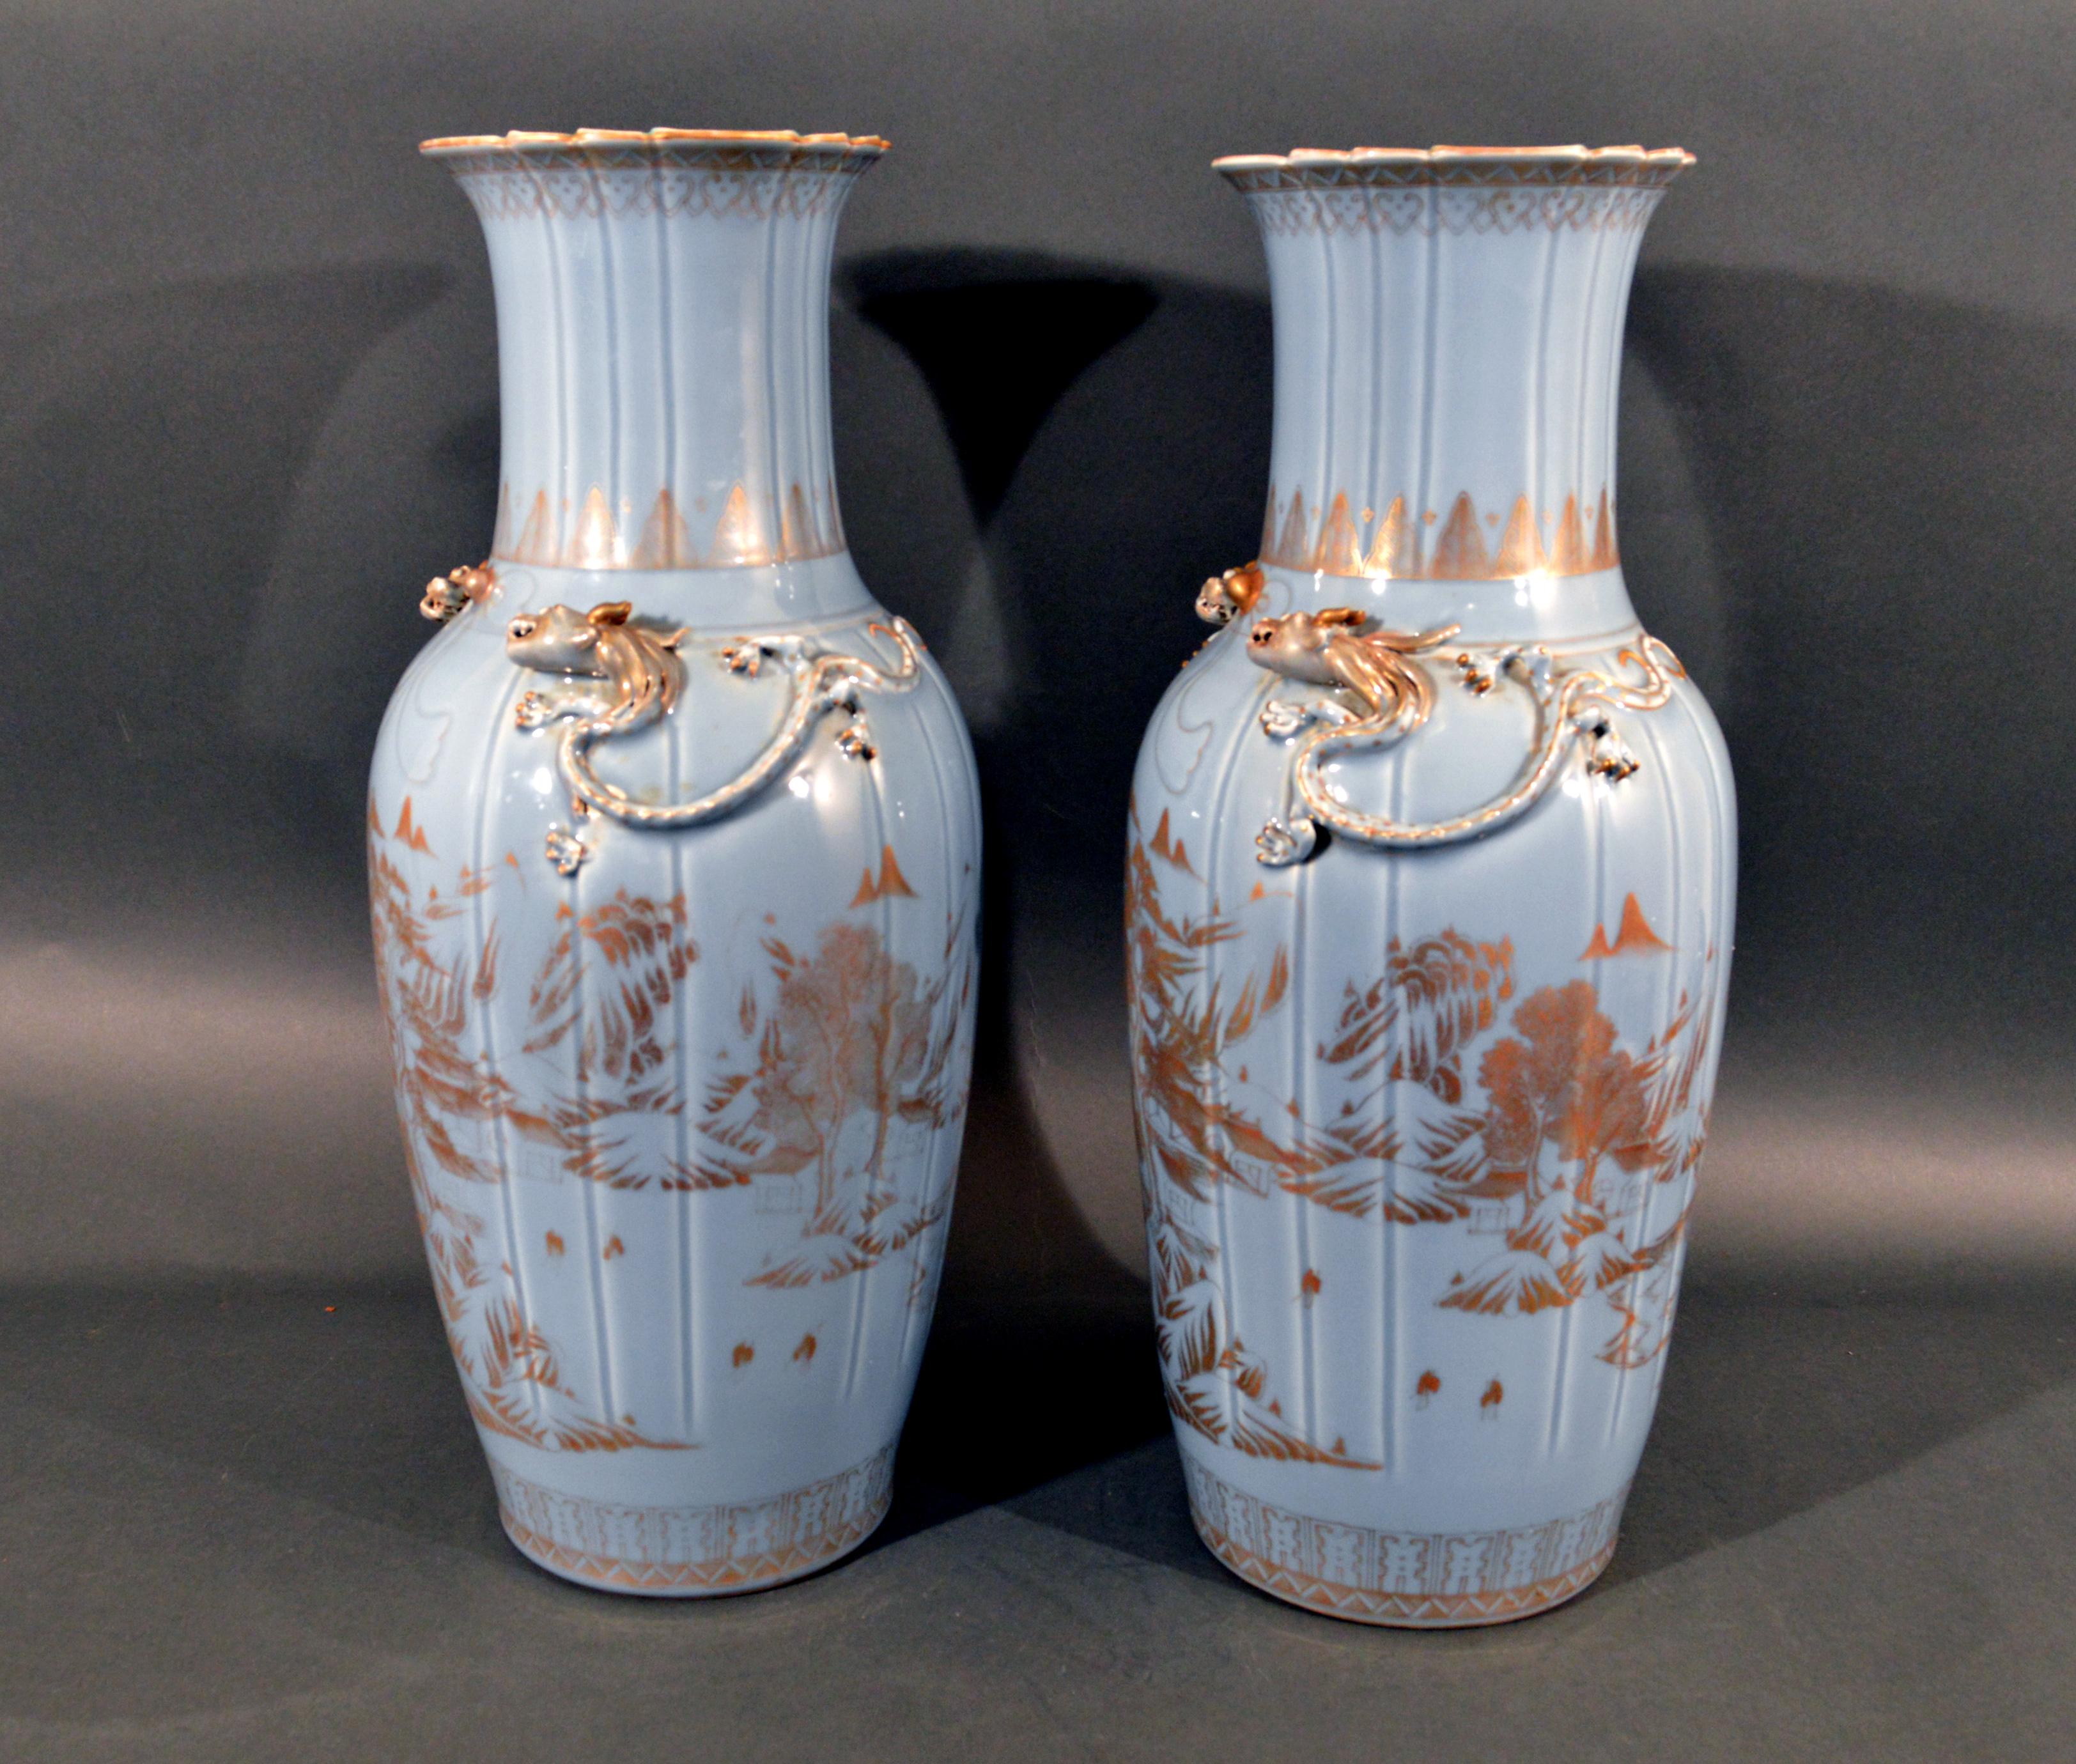 Chinese Export Porcelain Clare De Lune Blue Vases, Mid-19th Century 1